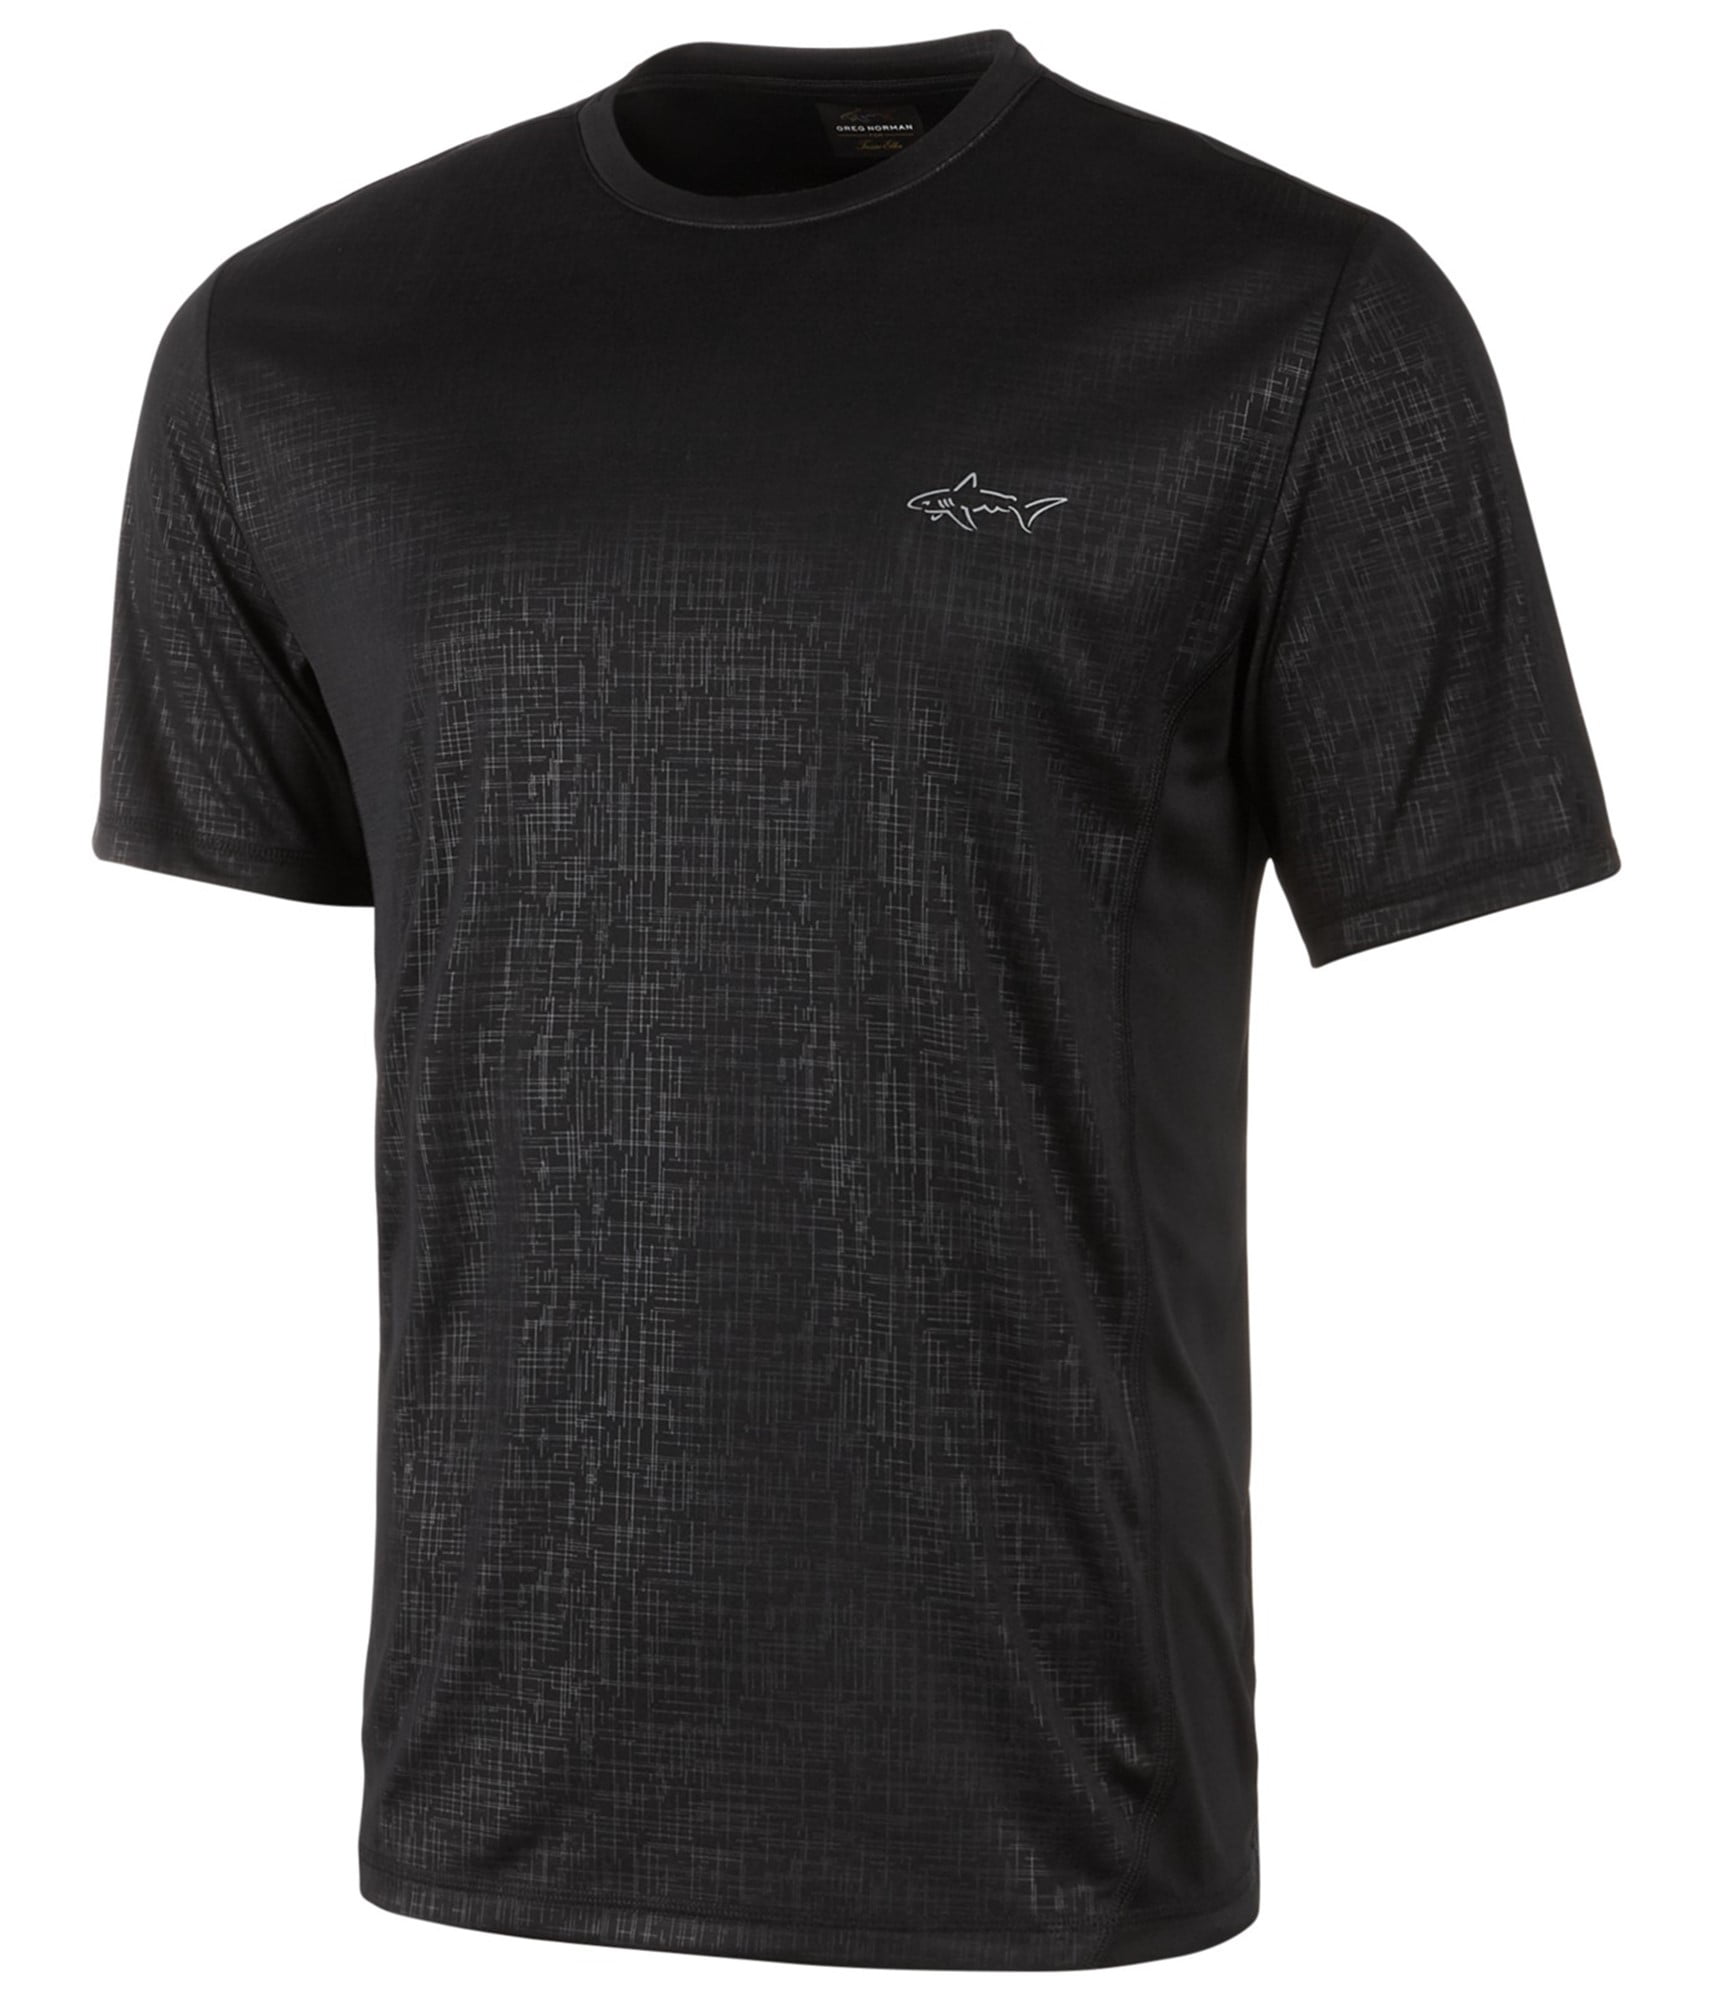 Greg Norman - Greg Norman Mens Embossed Basic T-Shirt deepblack S ...